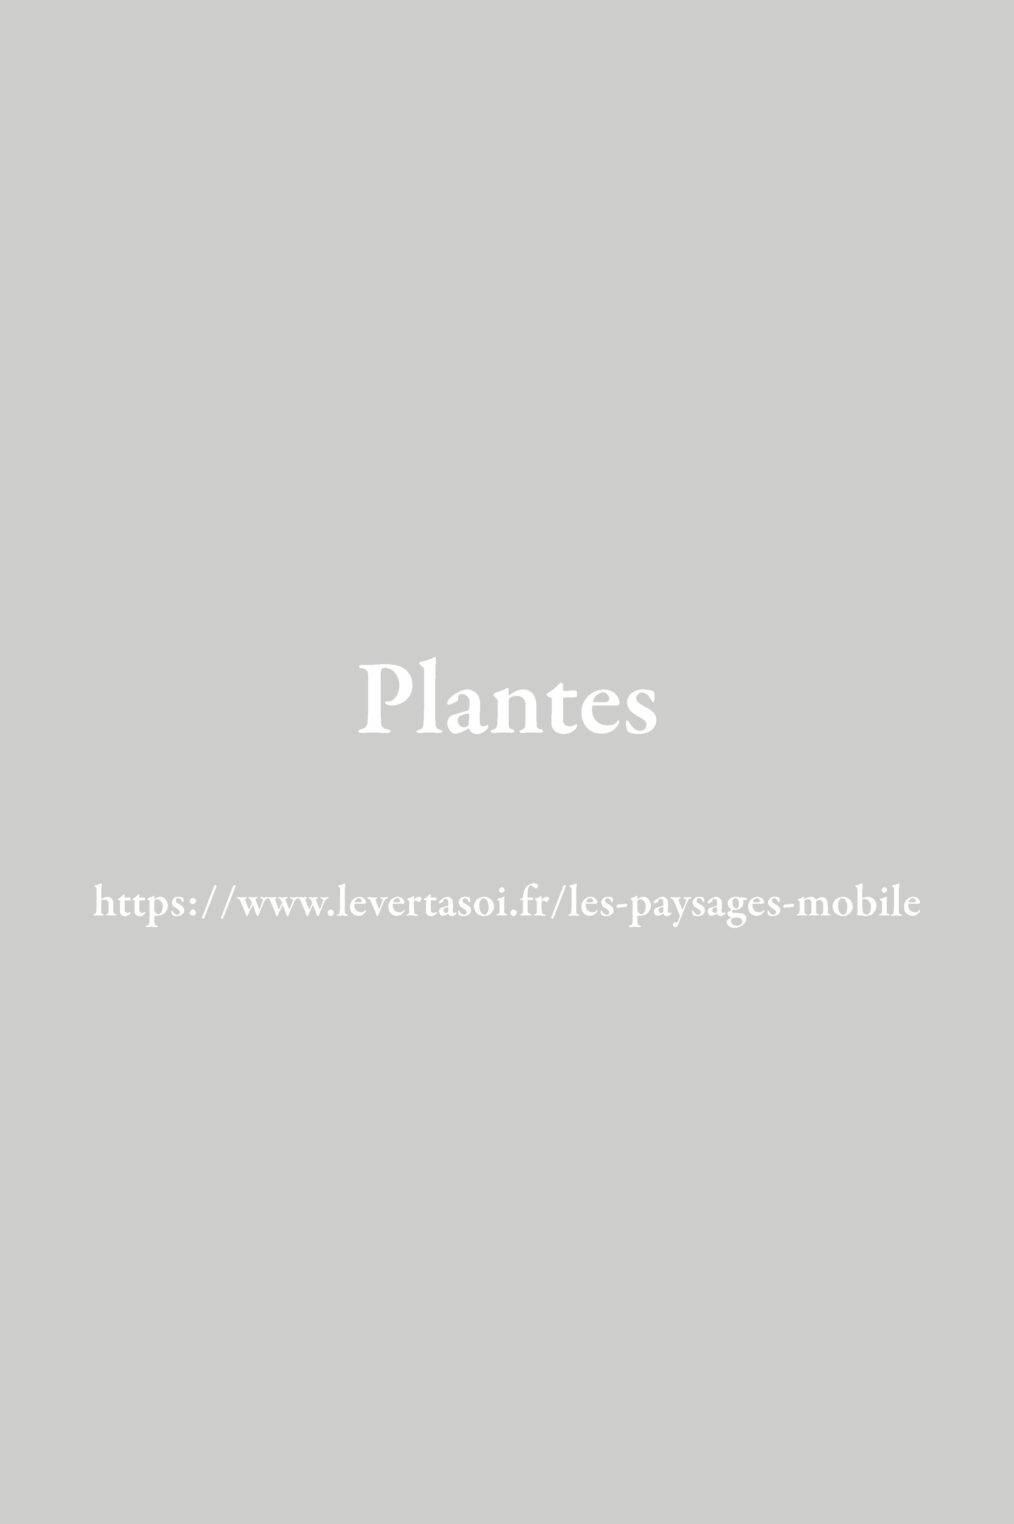 vign_plantes